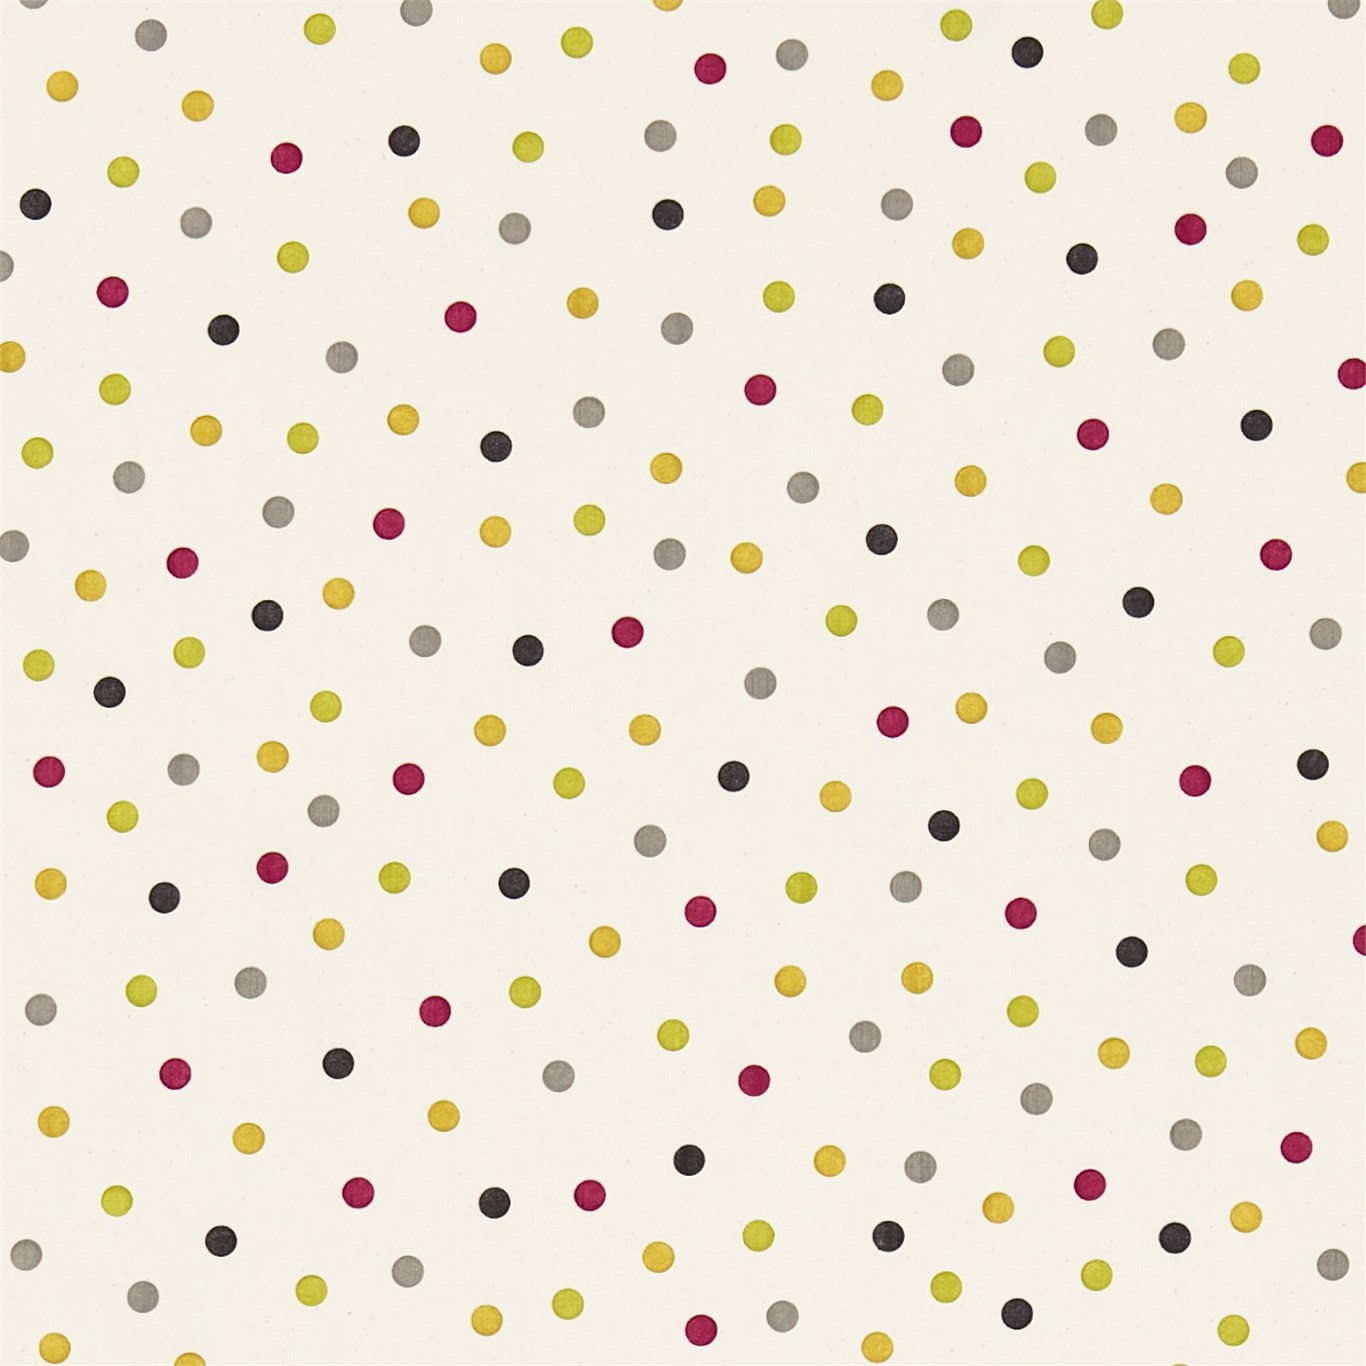 [49+] Gold Polka Dot Desktop Wallpaper on WallpaperSafari